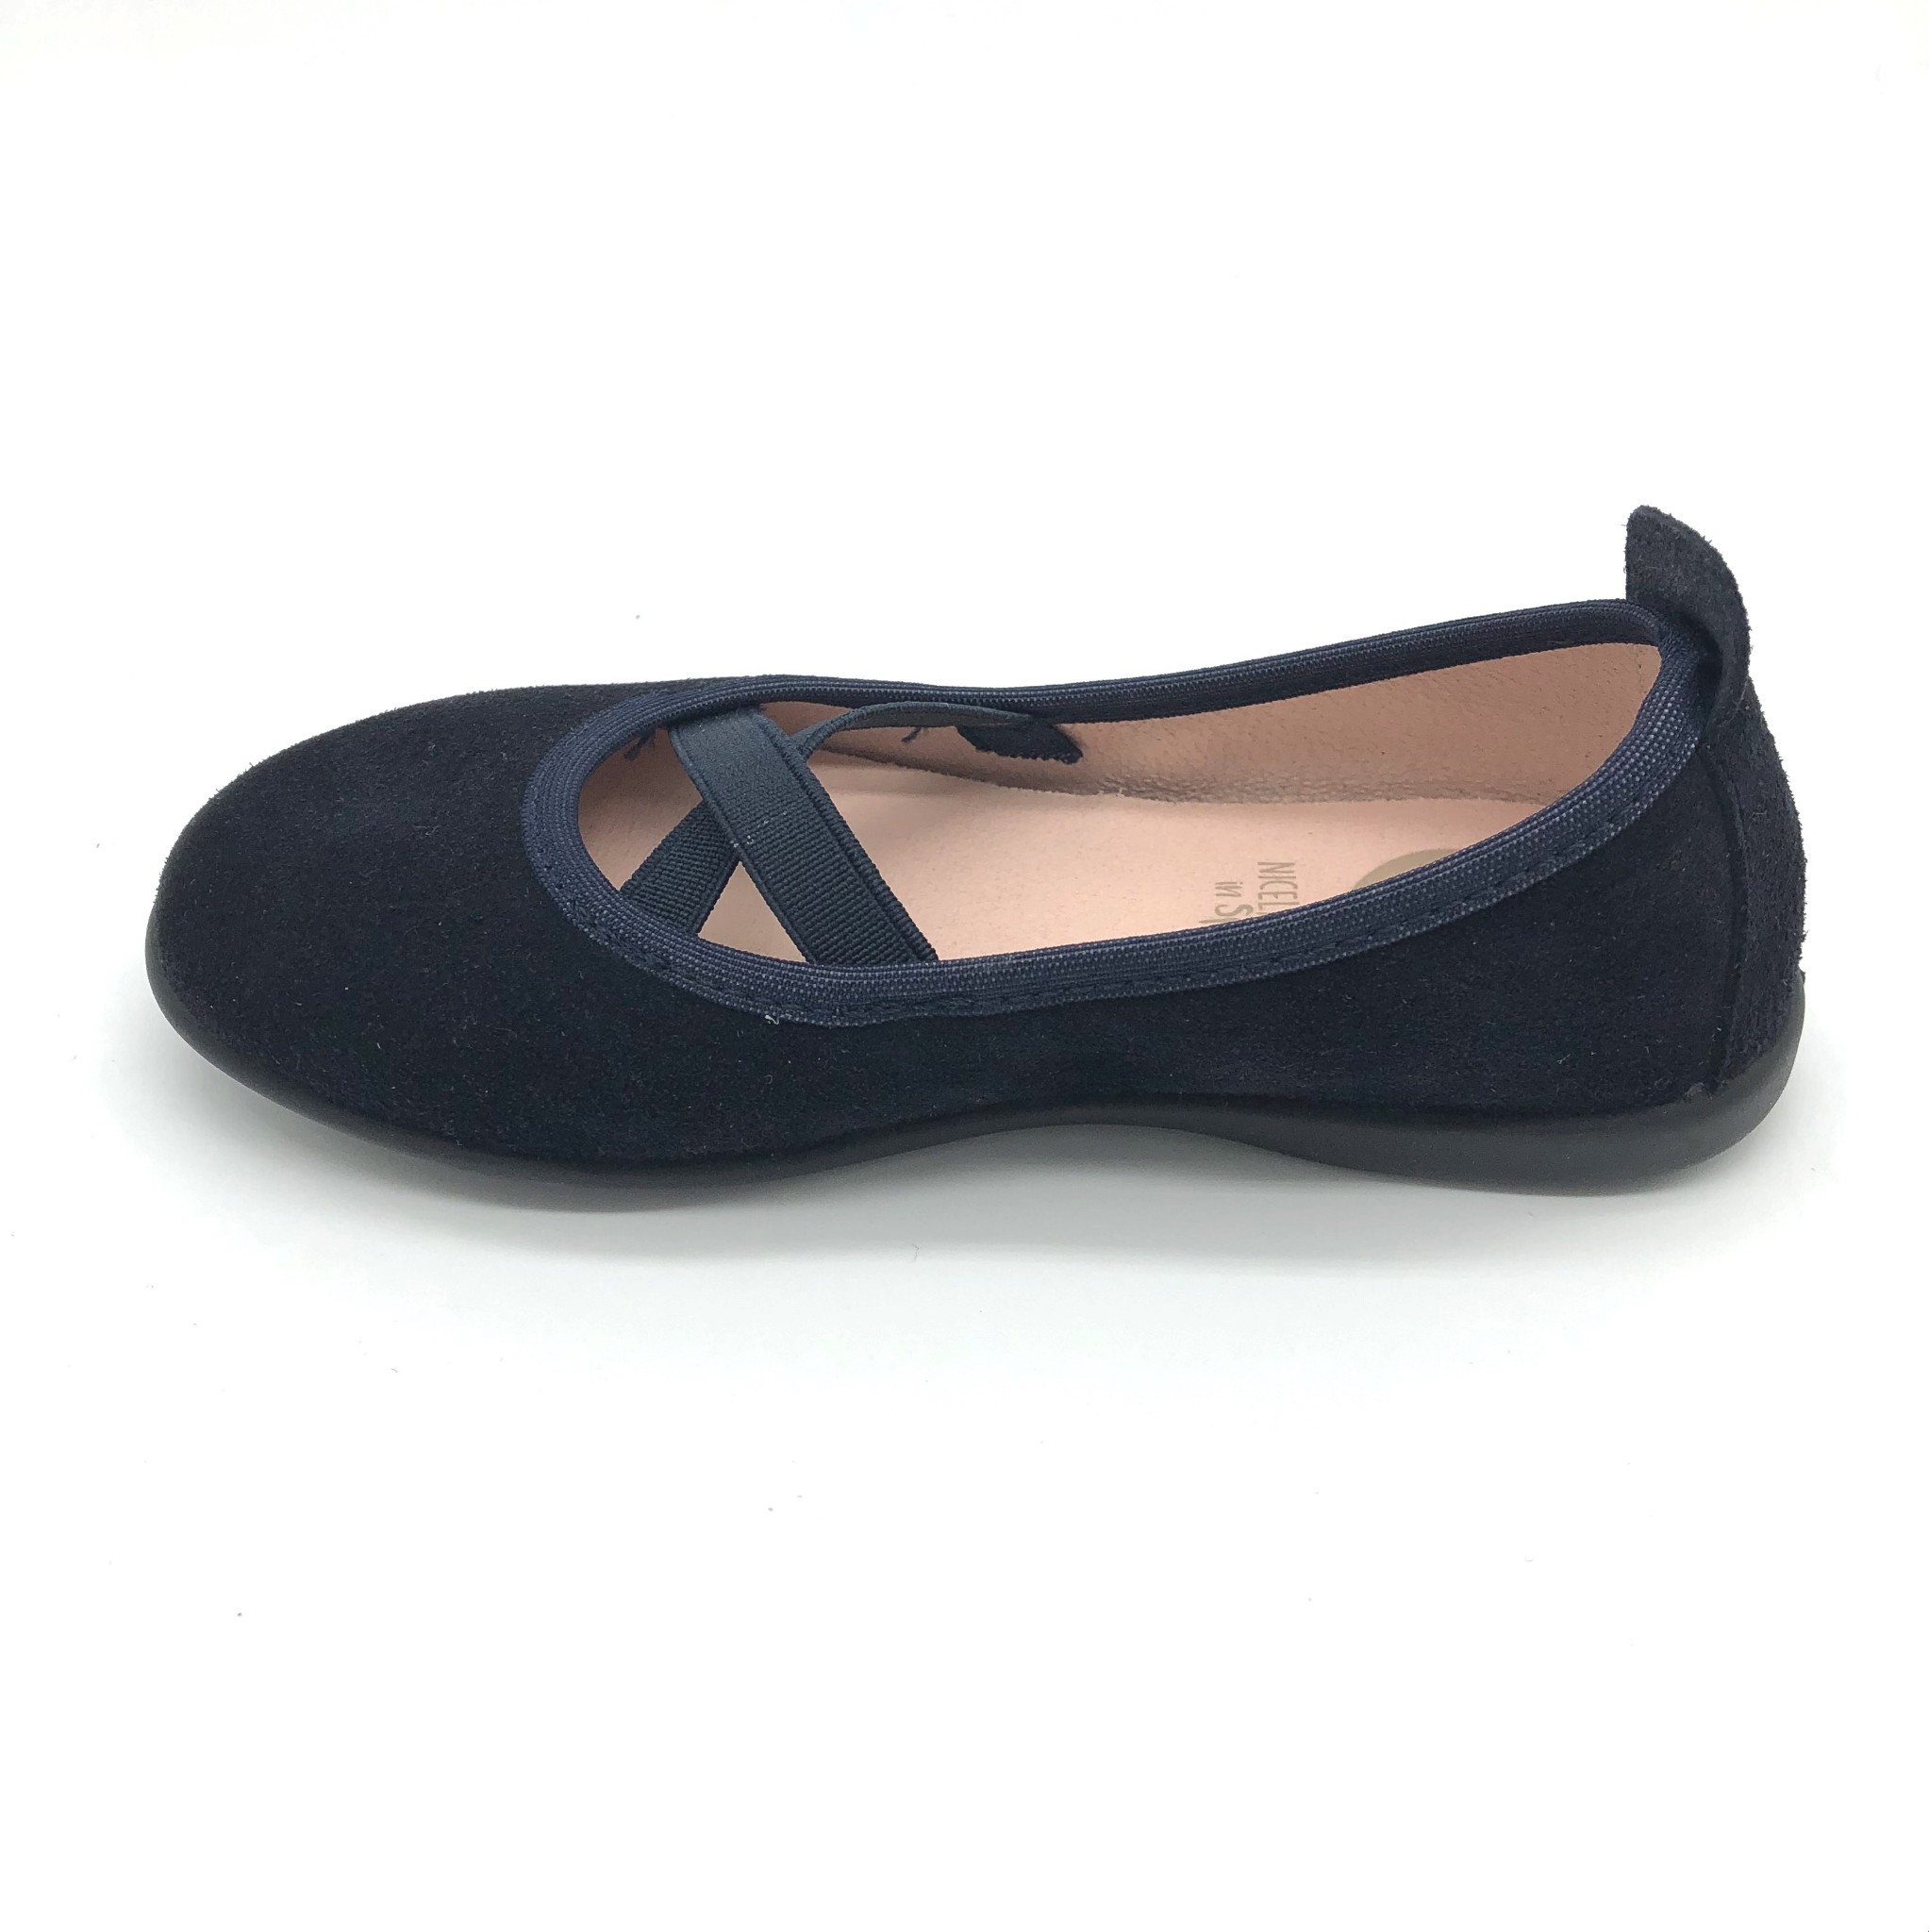 41630 60/% OFF RRP Gioseppo Girls/' Ballerina Shoes Black